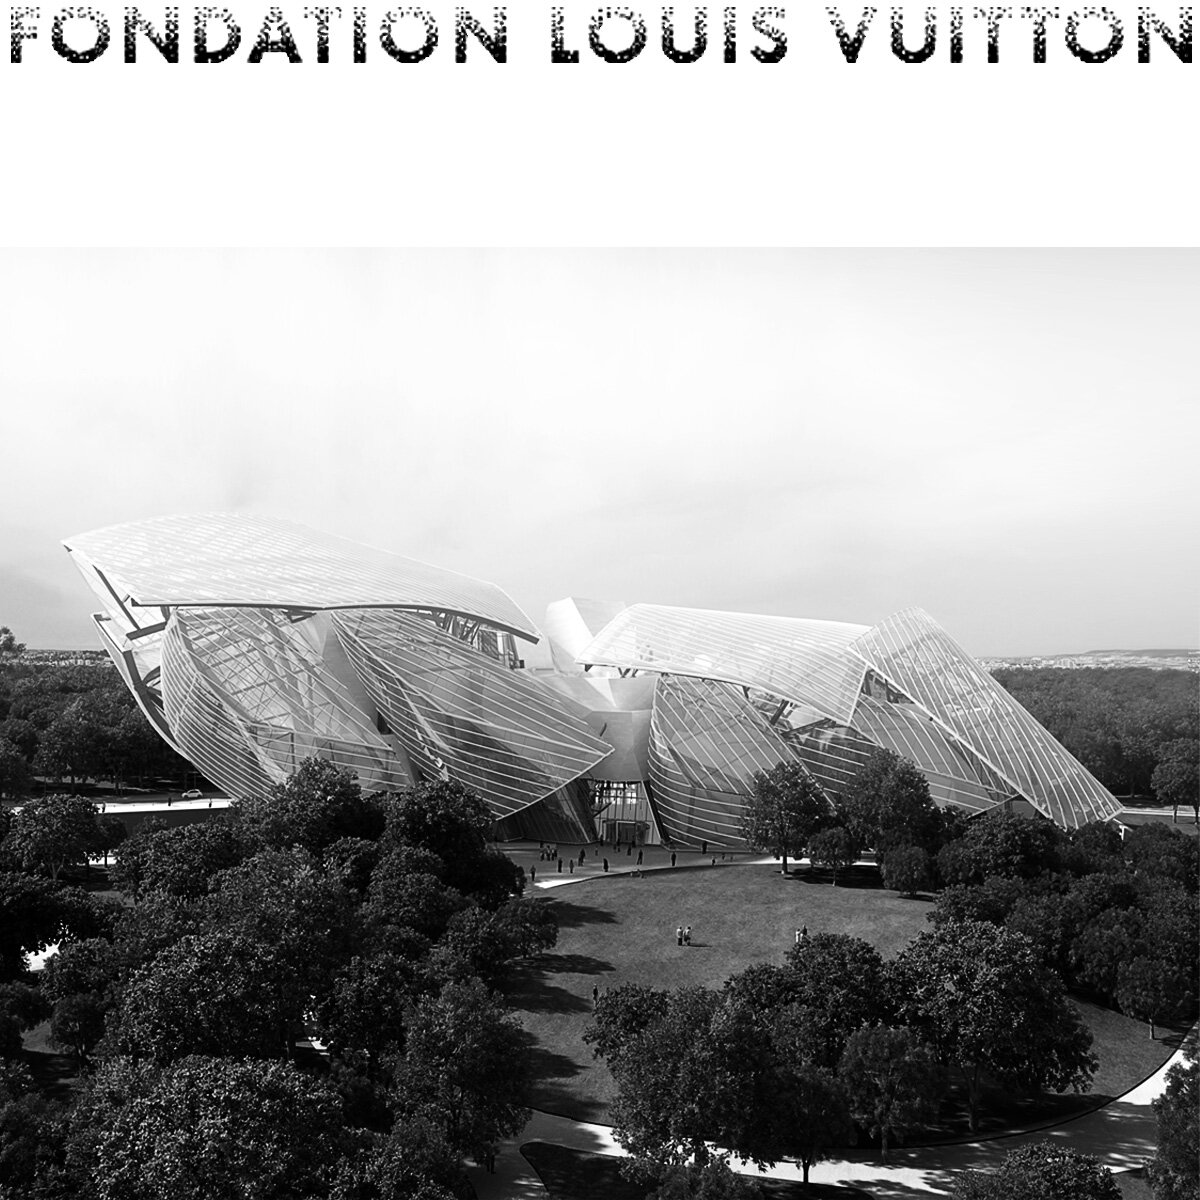 FOUNDATION LOUIS VUITTON, O'Bon Paris